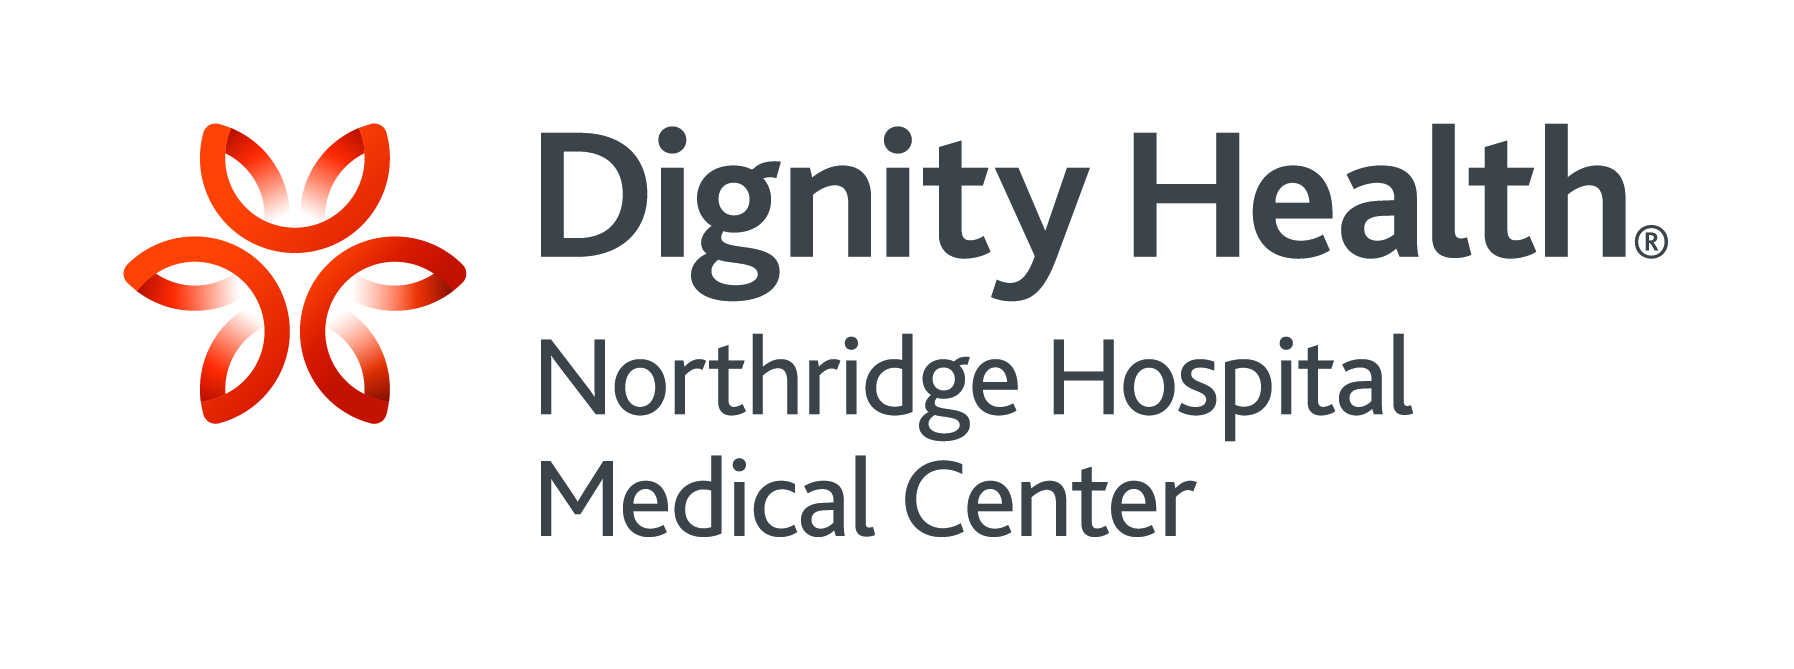 Dignity Health Northridge Hospital Medical Center Logo